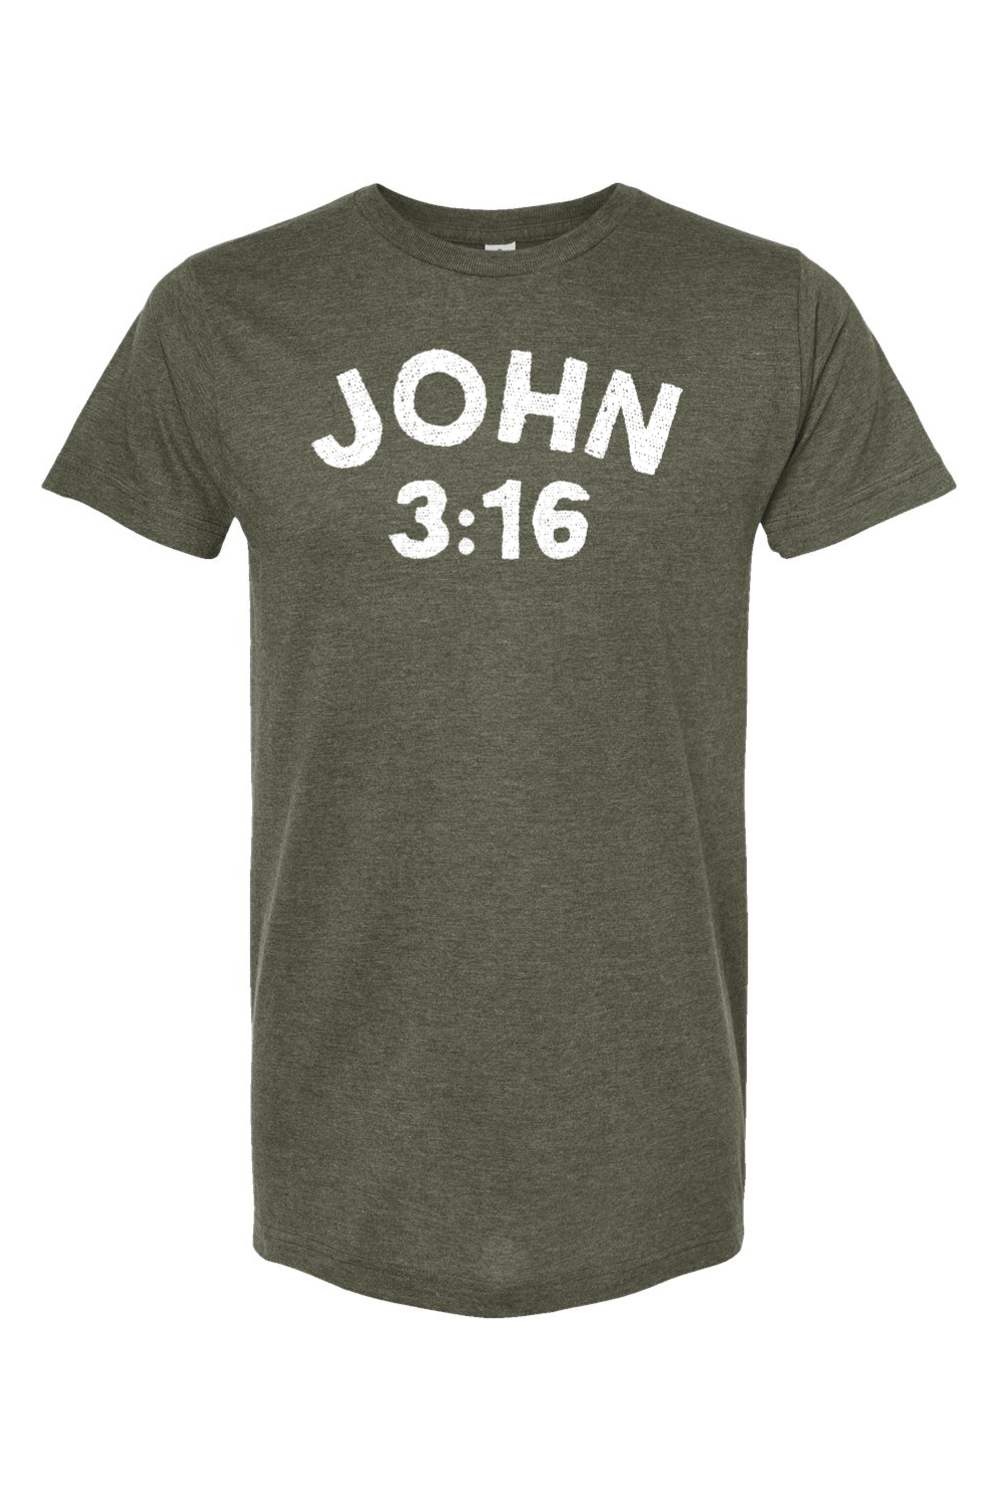 John 3:16 - T-Shirt